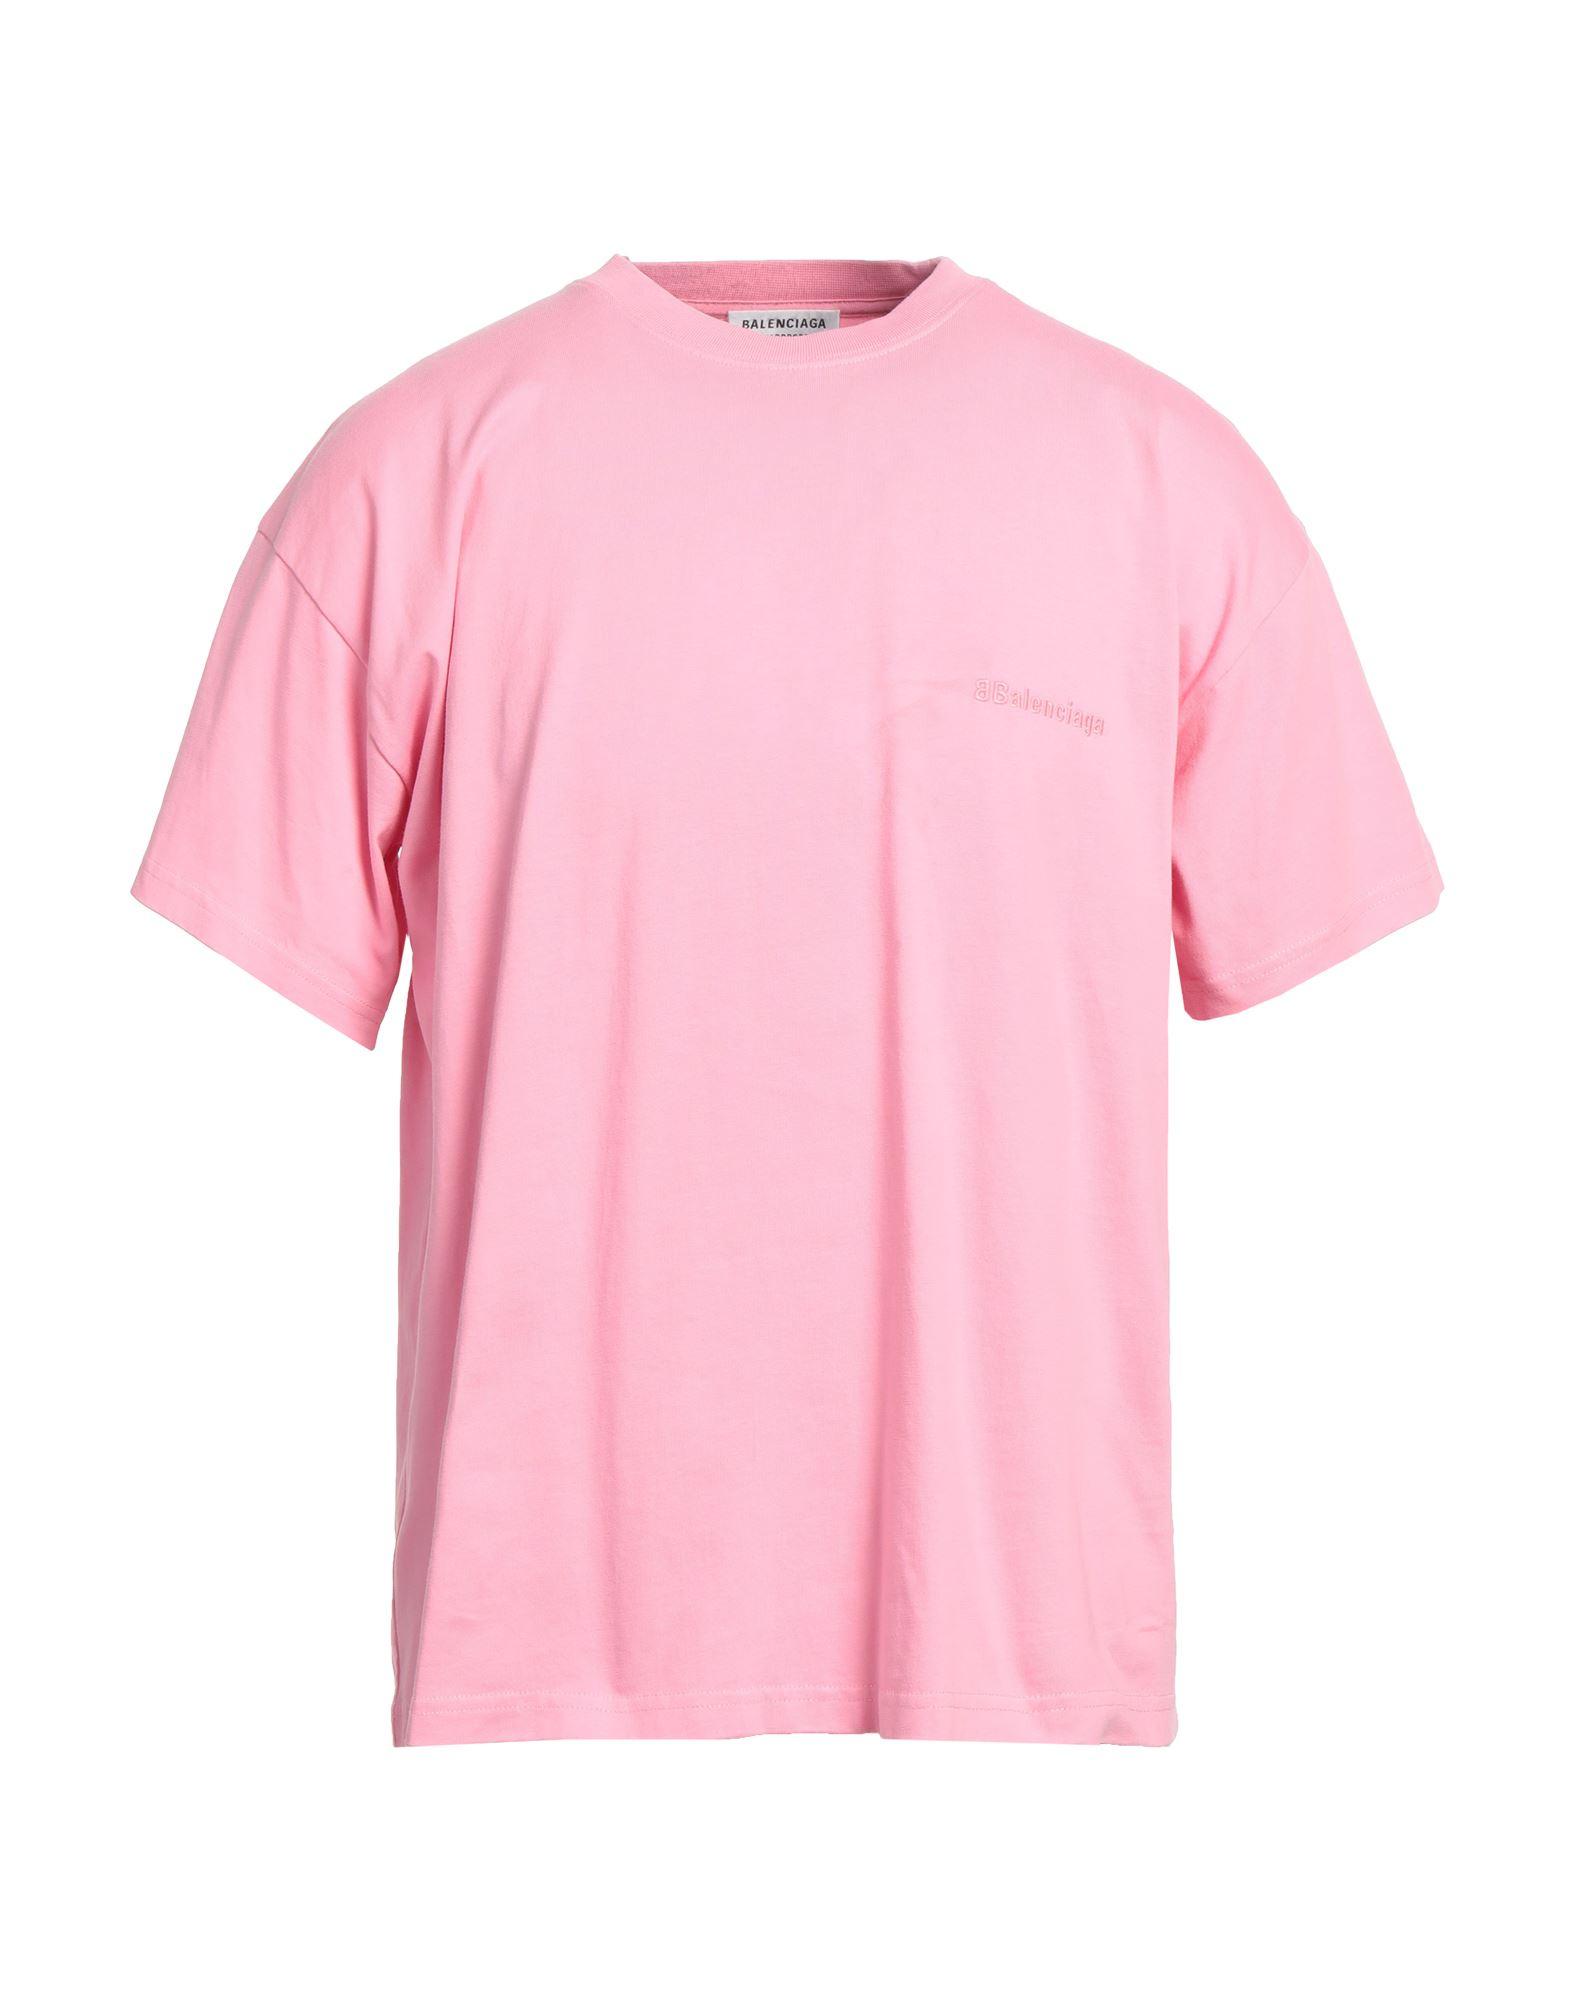 Balenciaga T-shirt in Pink for Men | Lyst